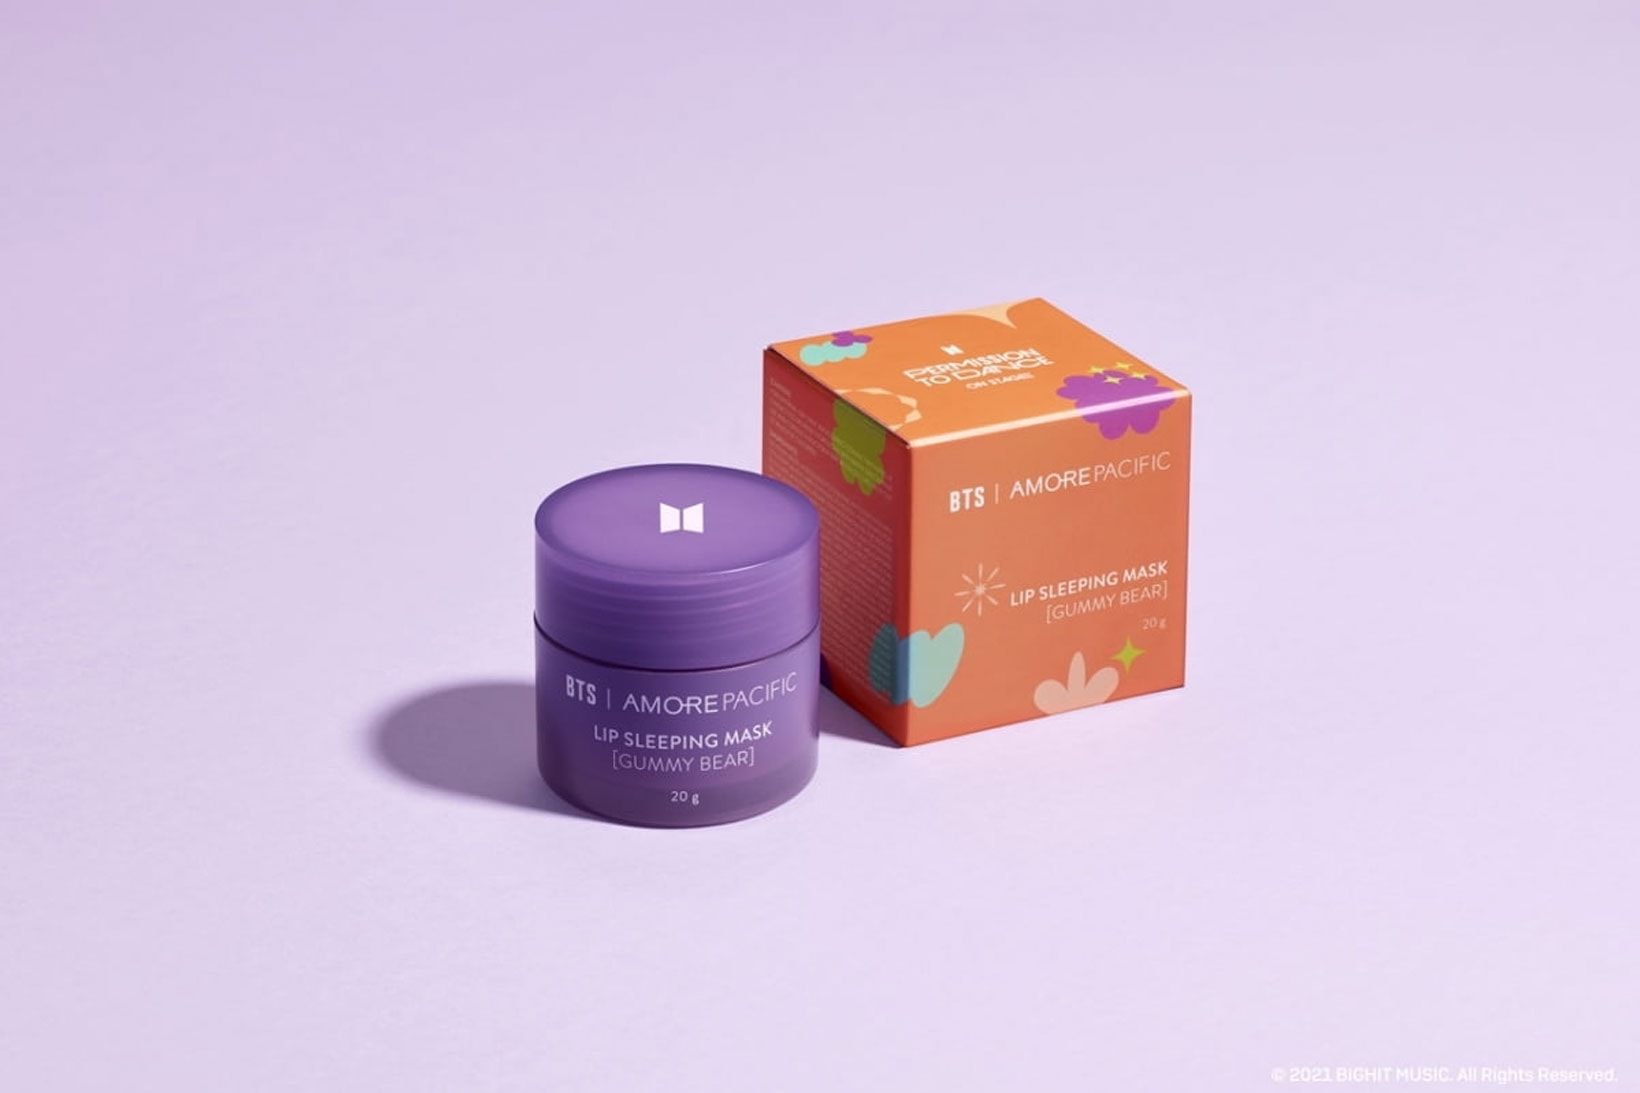 BTS AMOREPACIFIC Laneige Lip Sleeping Mask Gummy Bear Packaging Box